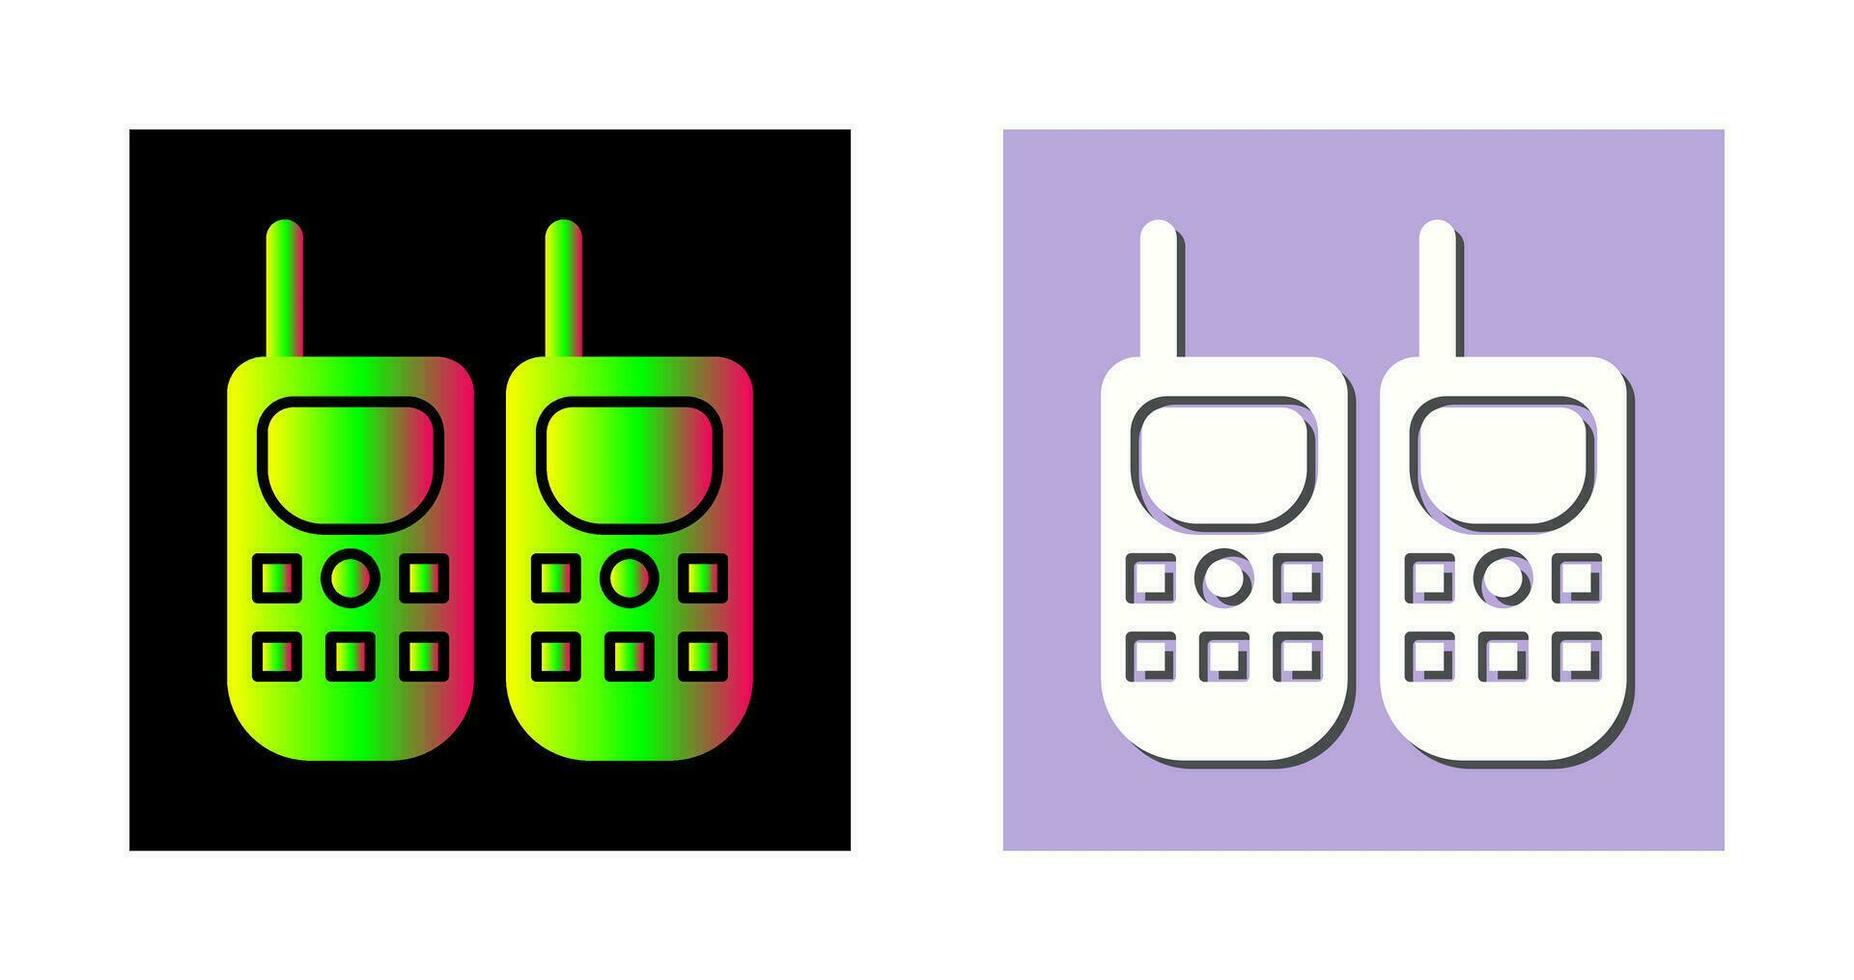 walkie talkie vettore icona